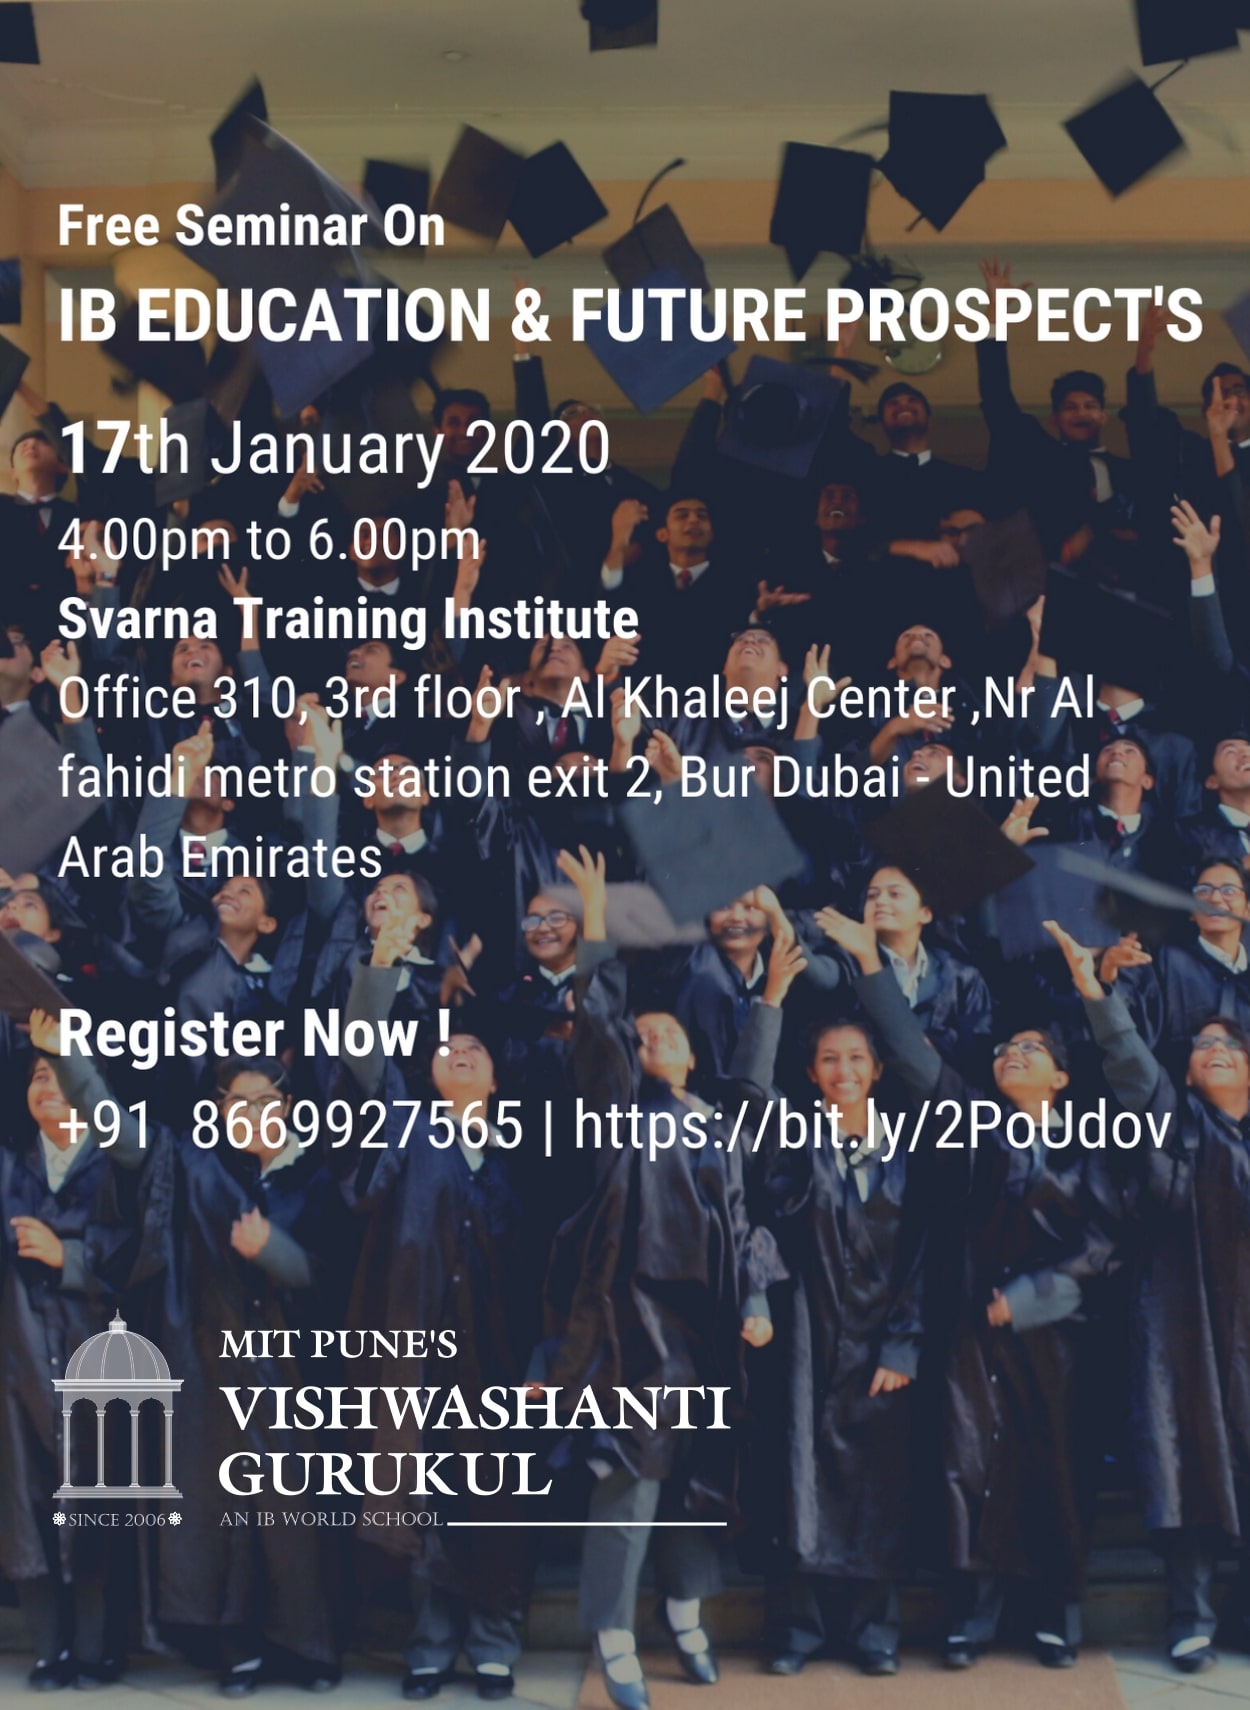 Understanding IB (International Baccalaureate) Board, Al Khaleej Center, Bur Dubai,Dubai,United Arab Emirates